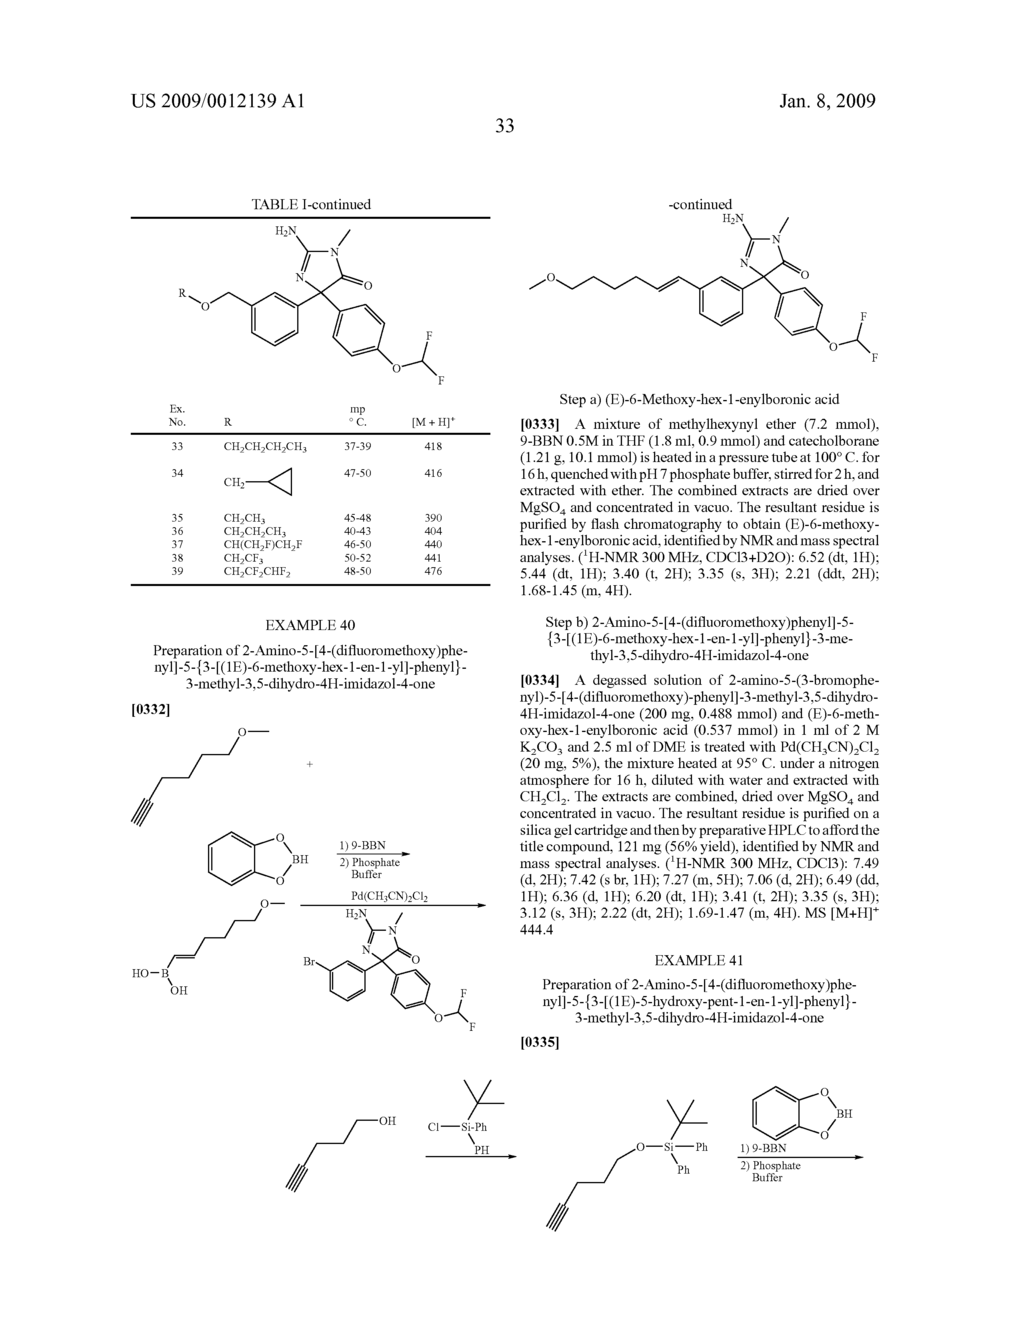 AMINO-5-[4-(DIFLUOROMETHOXY) PHENYL]-5-PHENYLIMIDAZOLONE COMPOUNDS FOR THE INHIBITION OF BETA-SECRETASE - diagram, schematic, and image 34